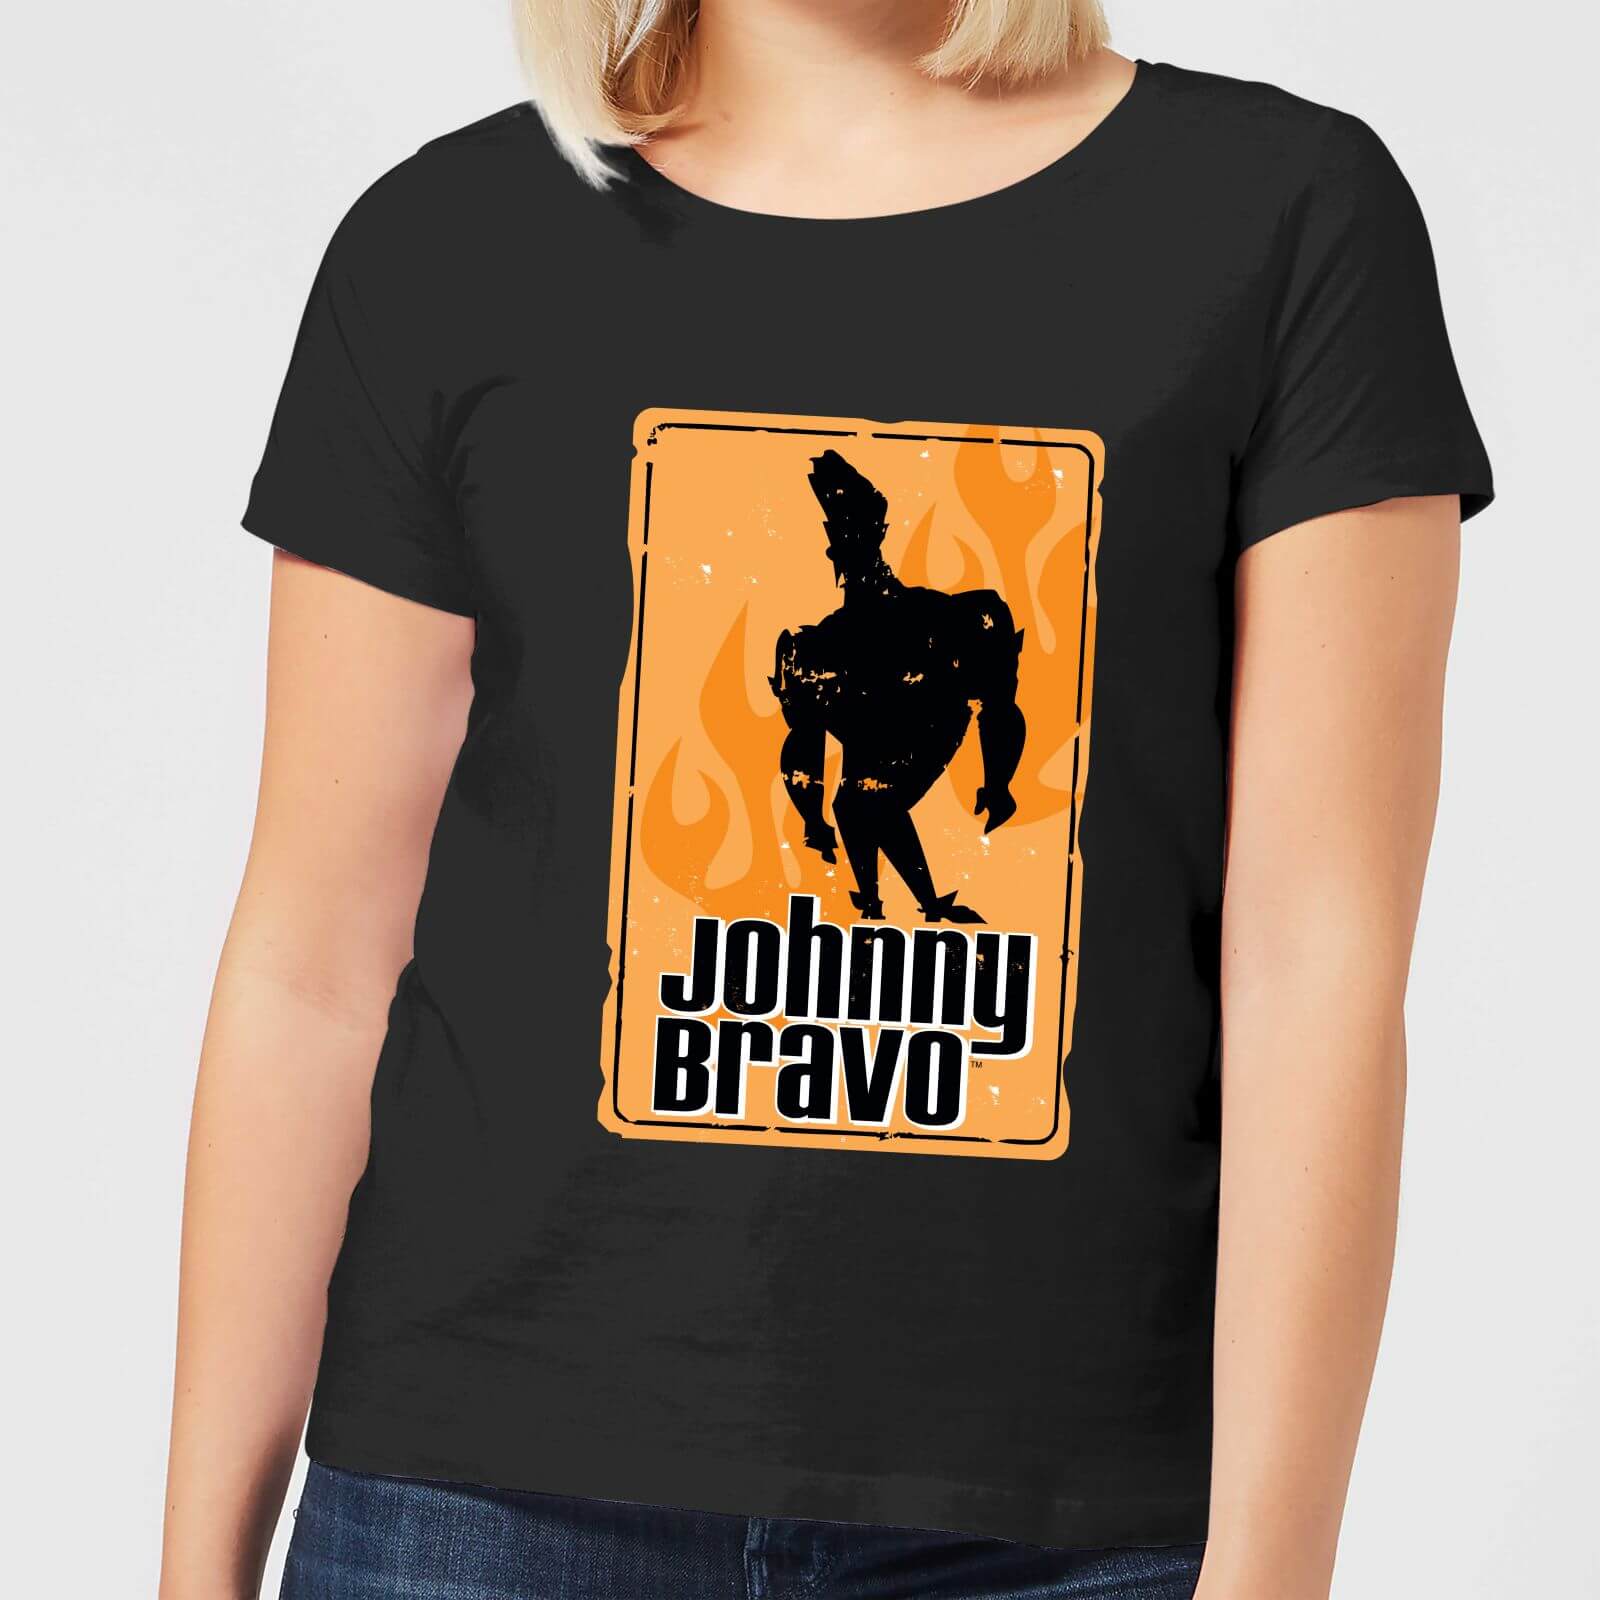 Cartoon Network Johnny Bravo Fire Women's T-Shirt - Black - M - Black